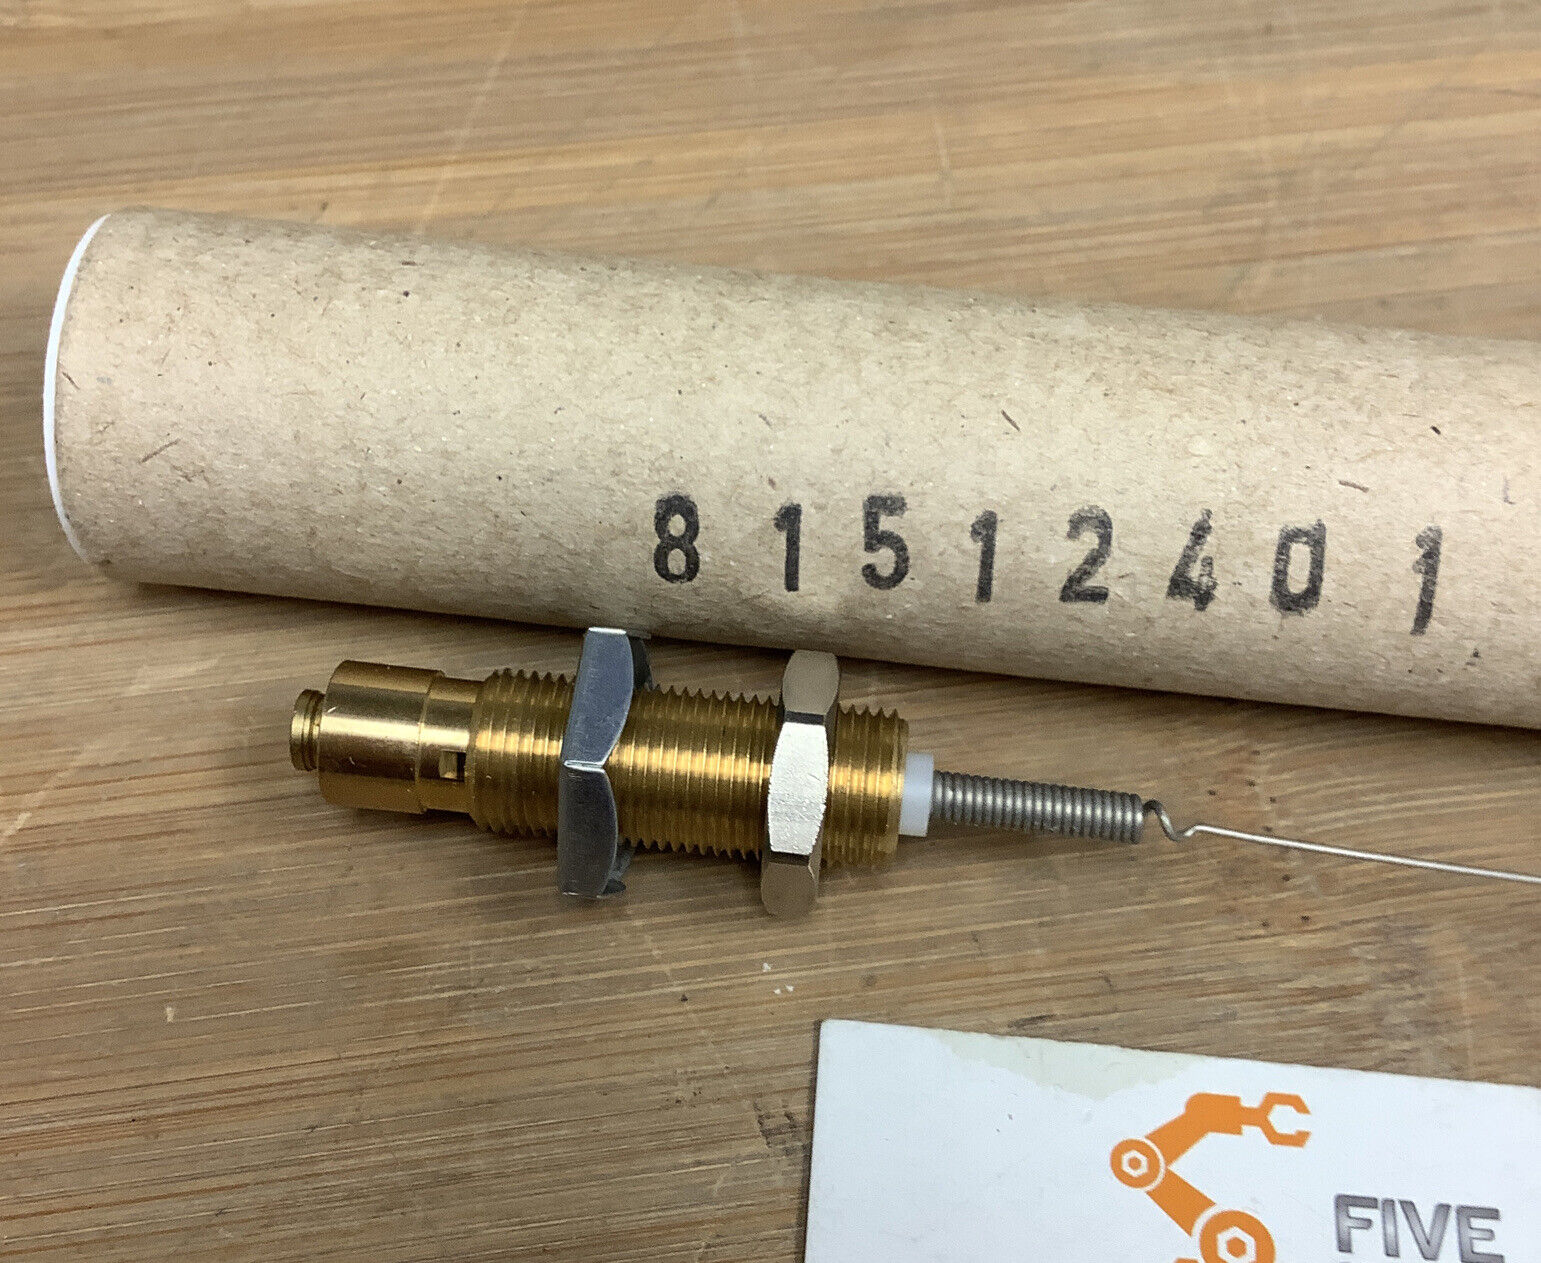 Crouzet 81512401 New Pneumatic Leak Detector / Sensor (BL127) - 0